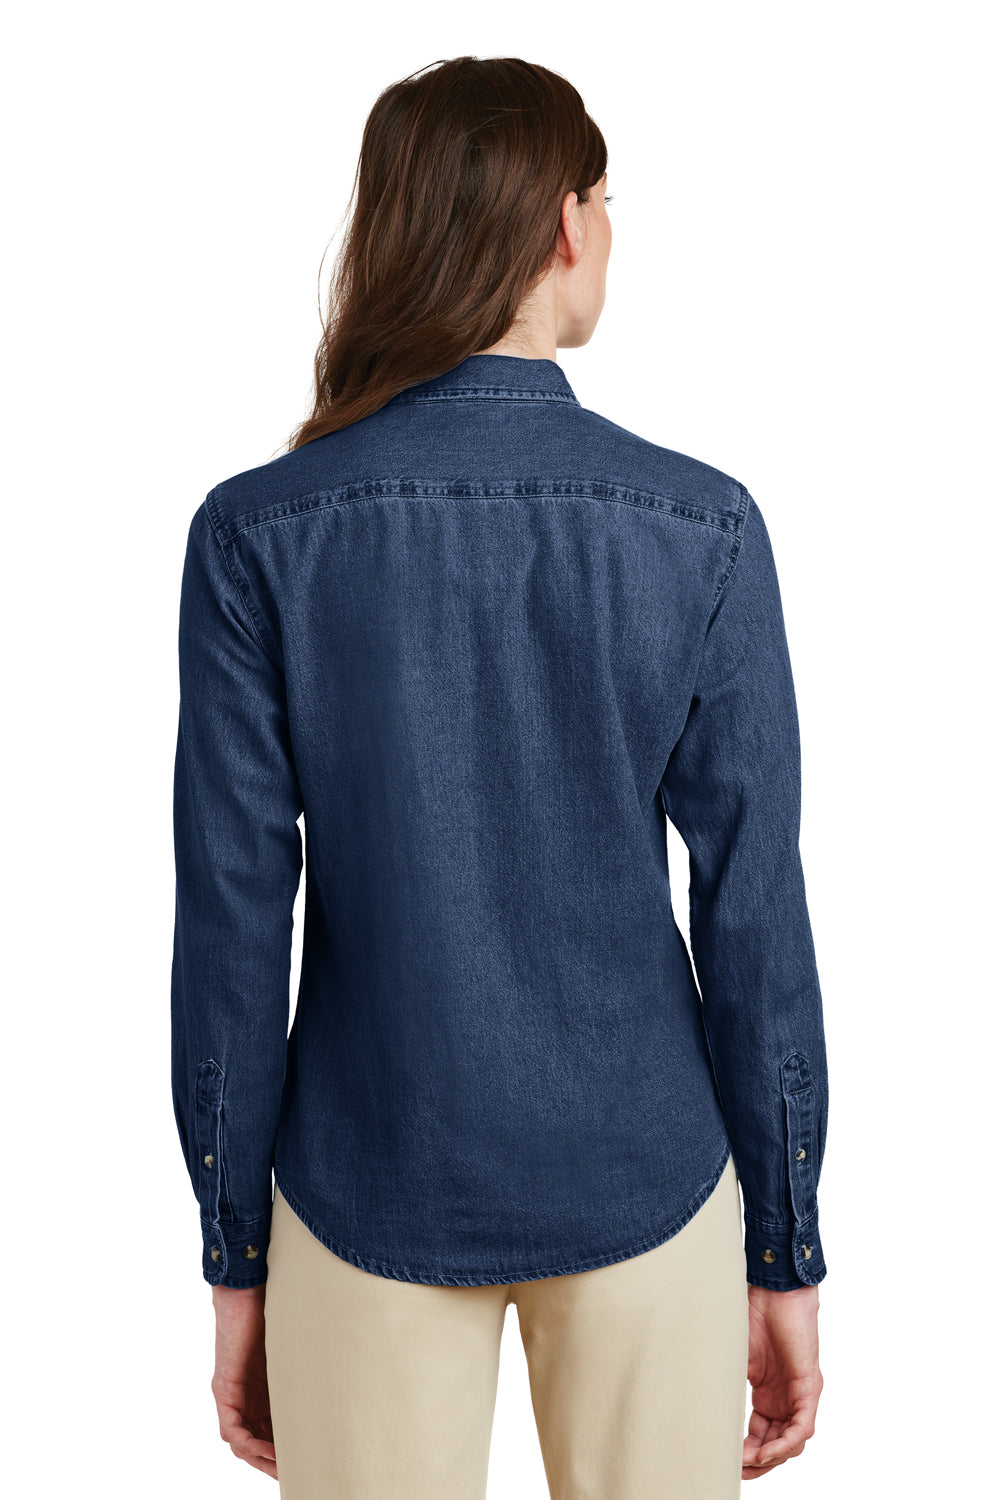 Port & Company LSP10 Womens Denim Long Sleeve Button Down Shirt Ink Blue Back